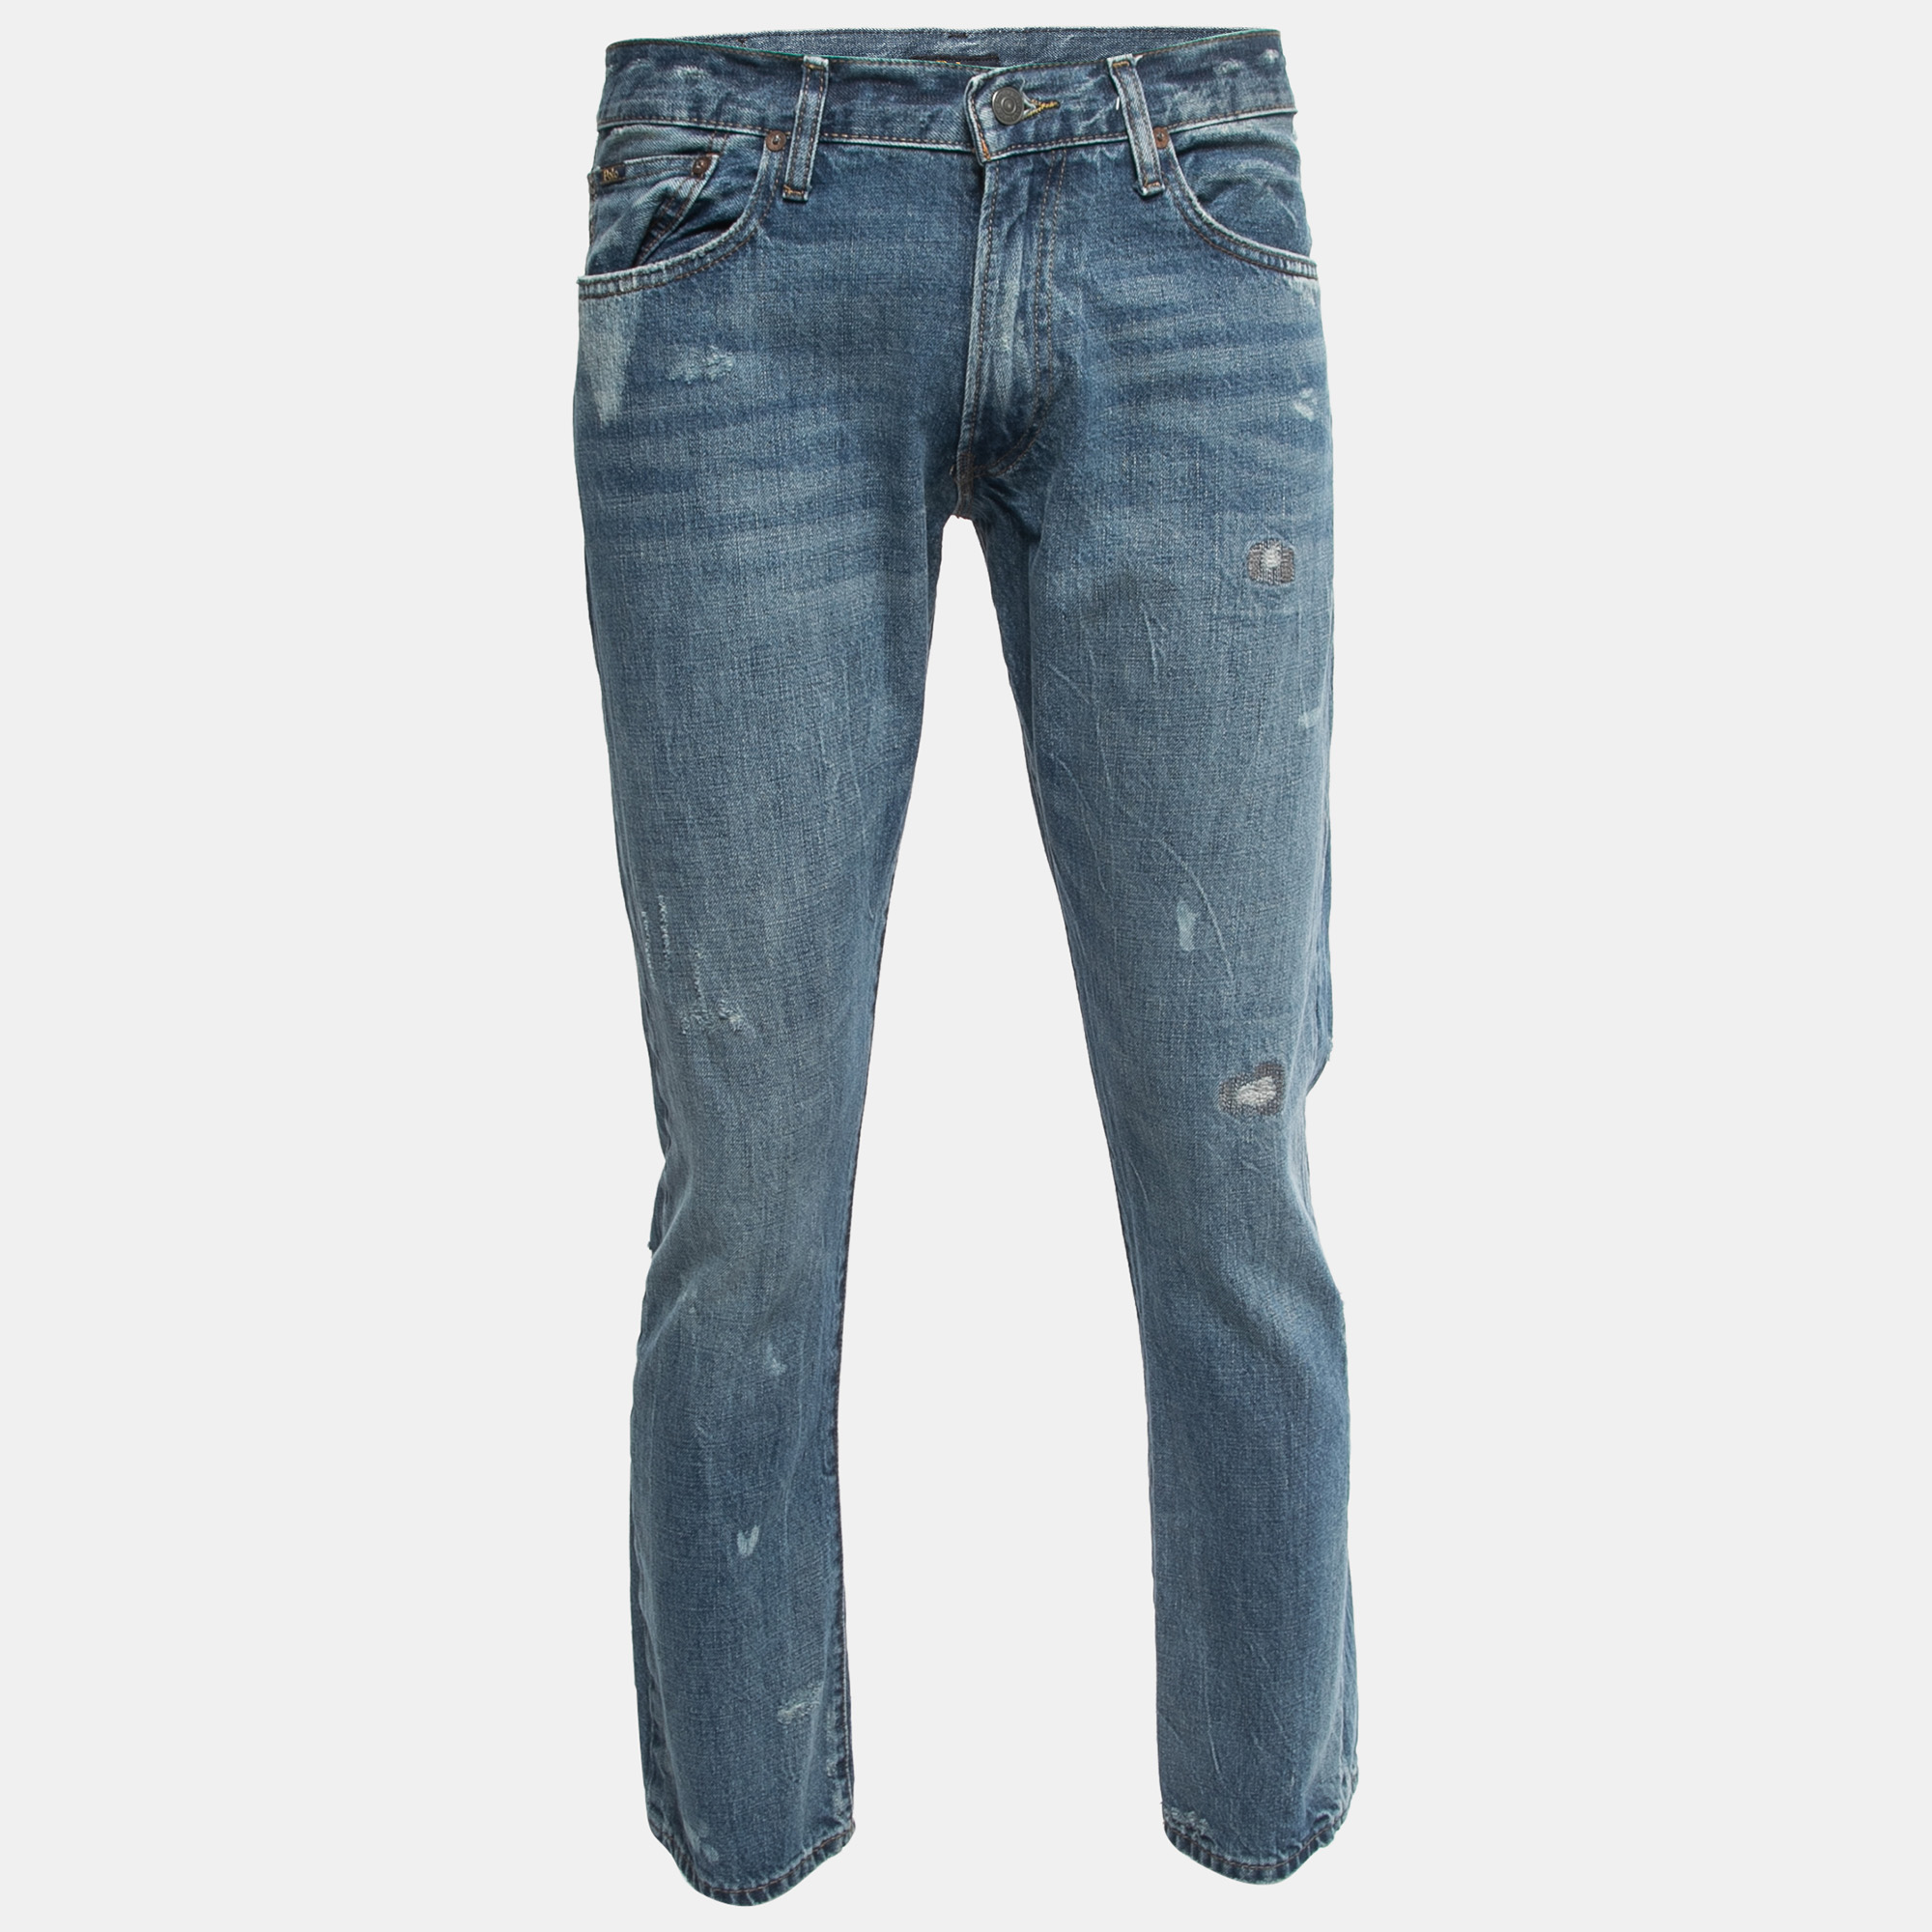 Polo Ralph Lauren Blue Washed & Distressed Denim The Varick Slim Straight Jeans M Waist 32